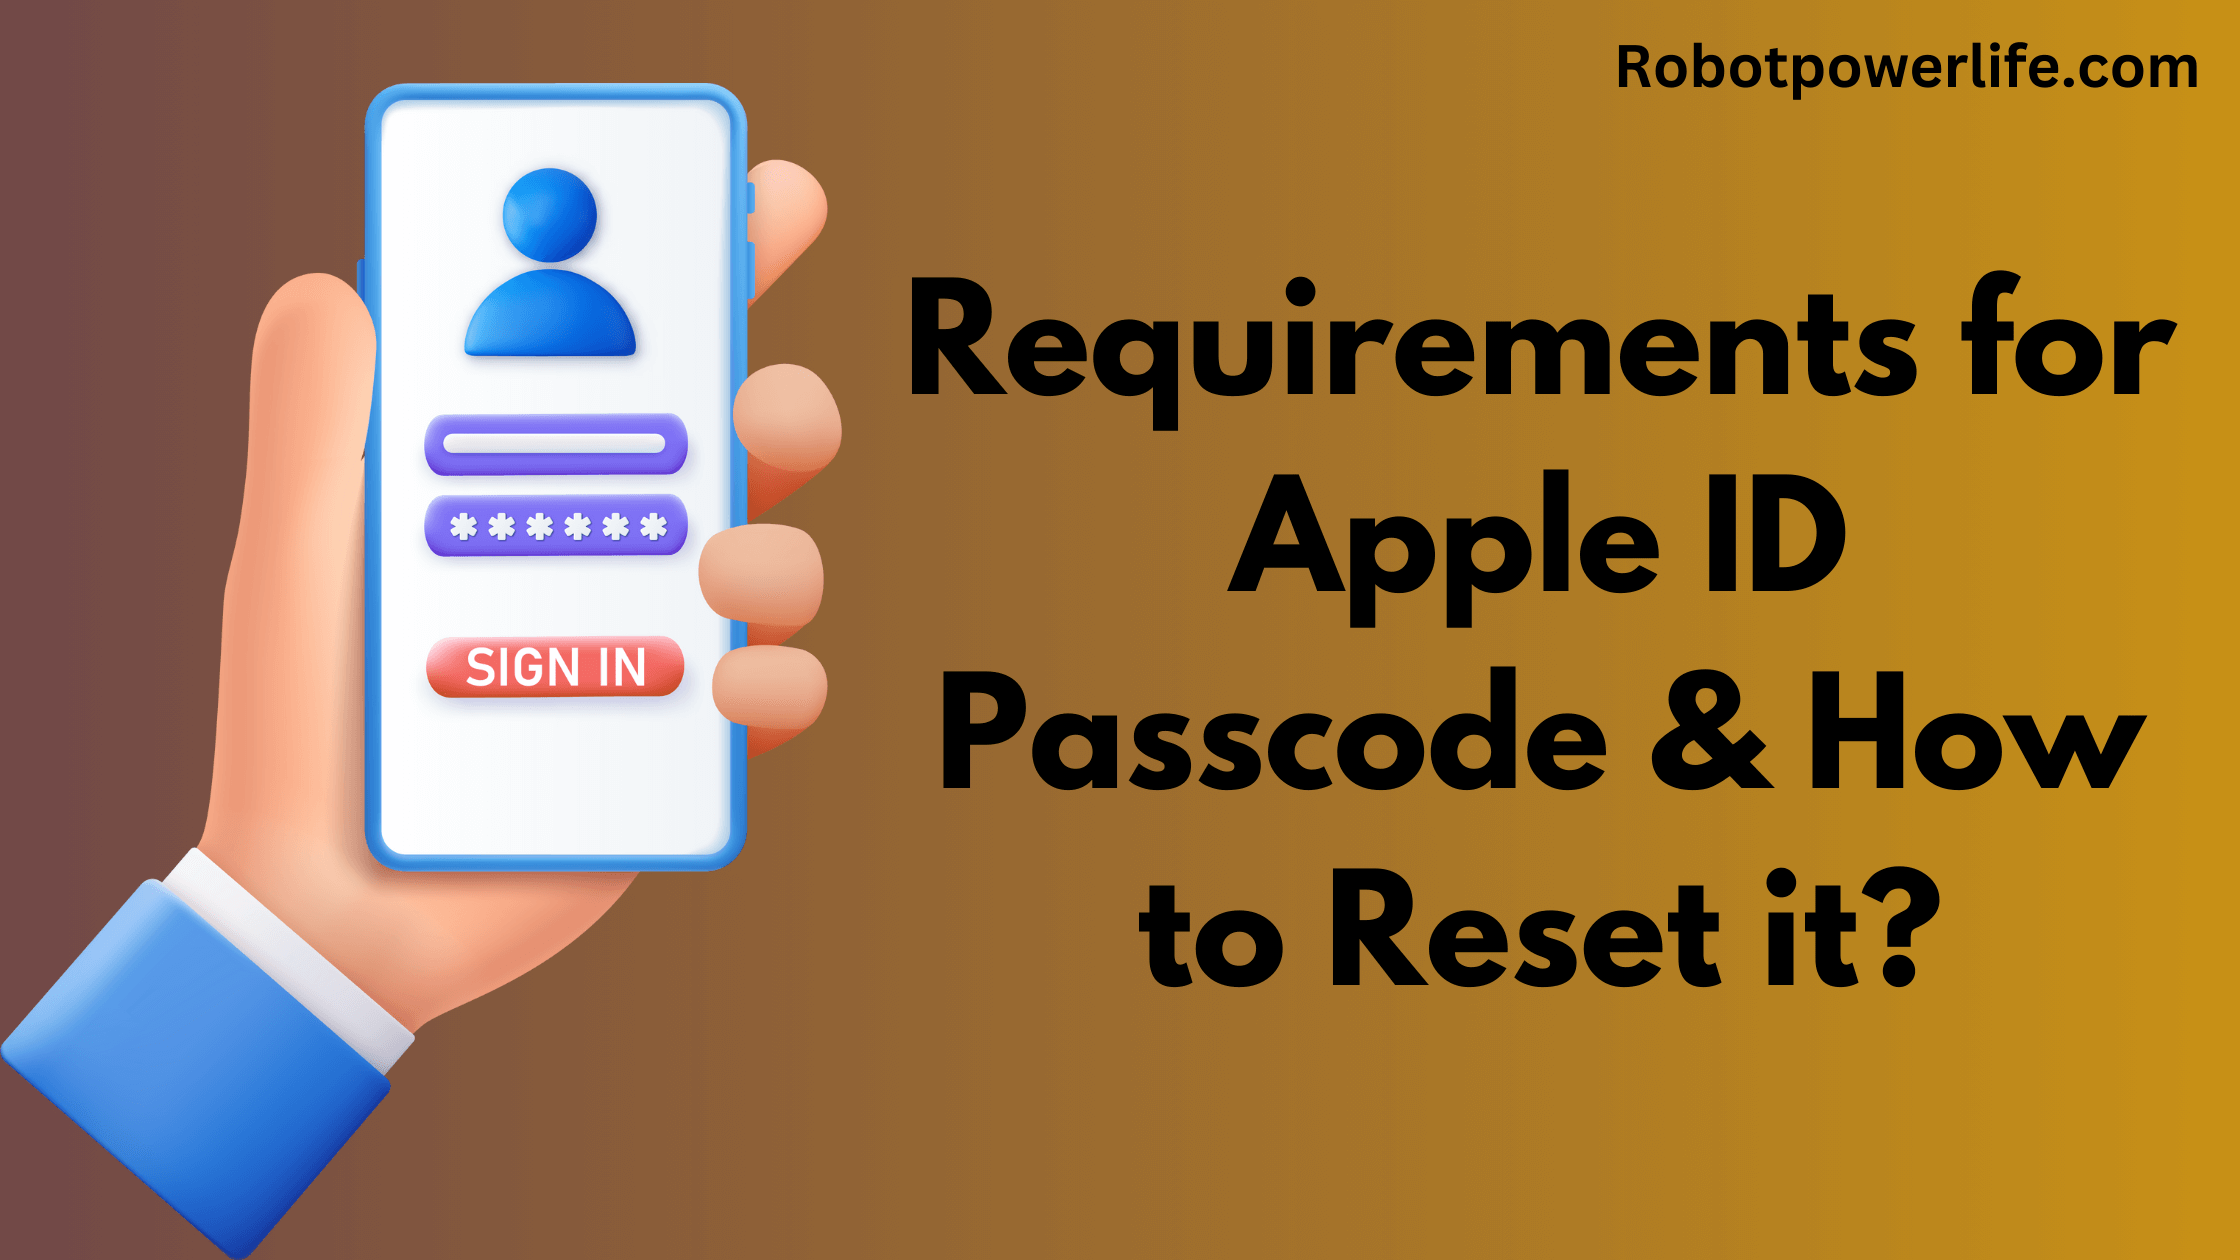 Apple ID Passcode & How to Reset it